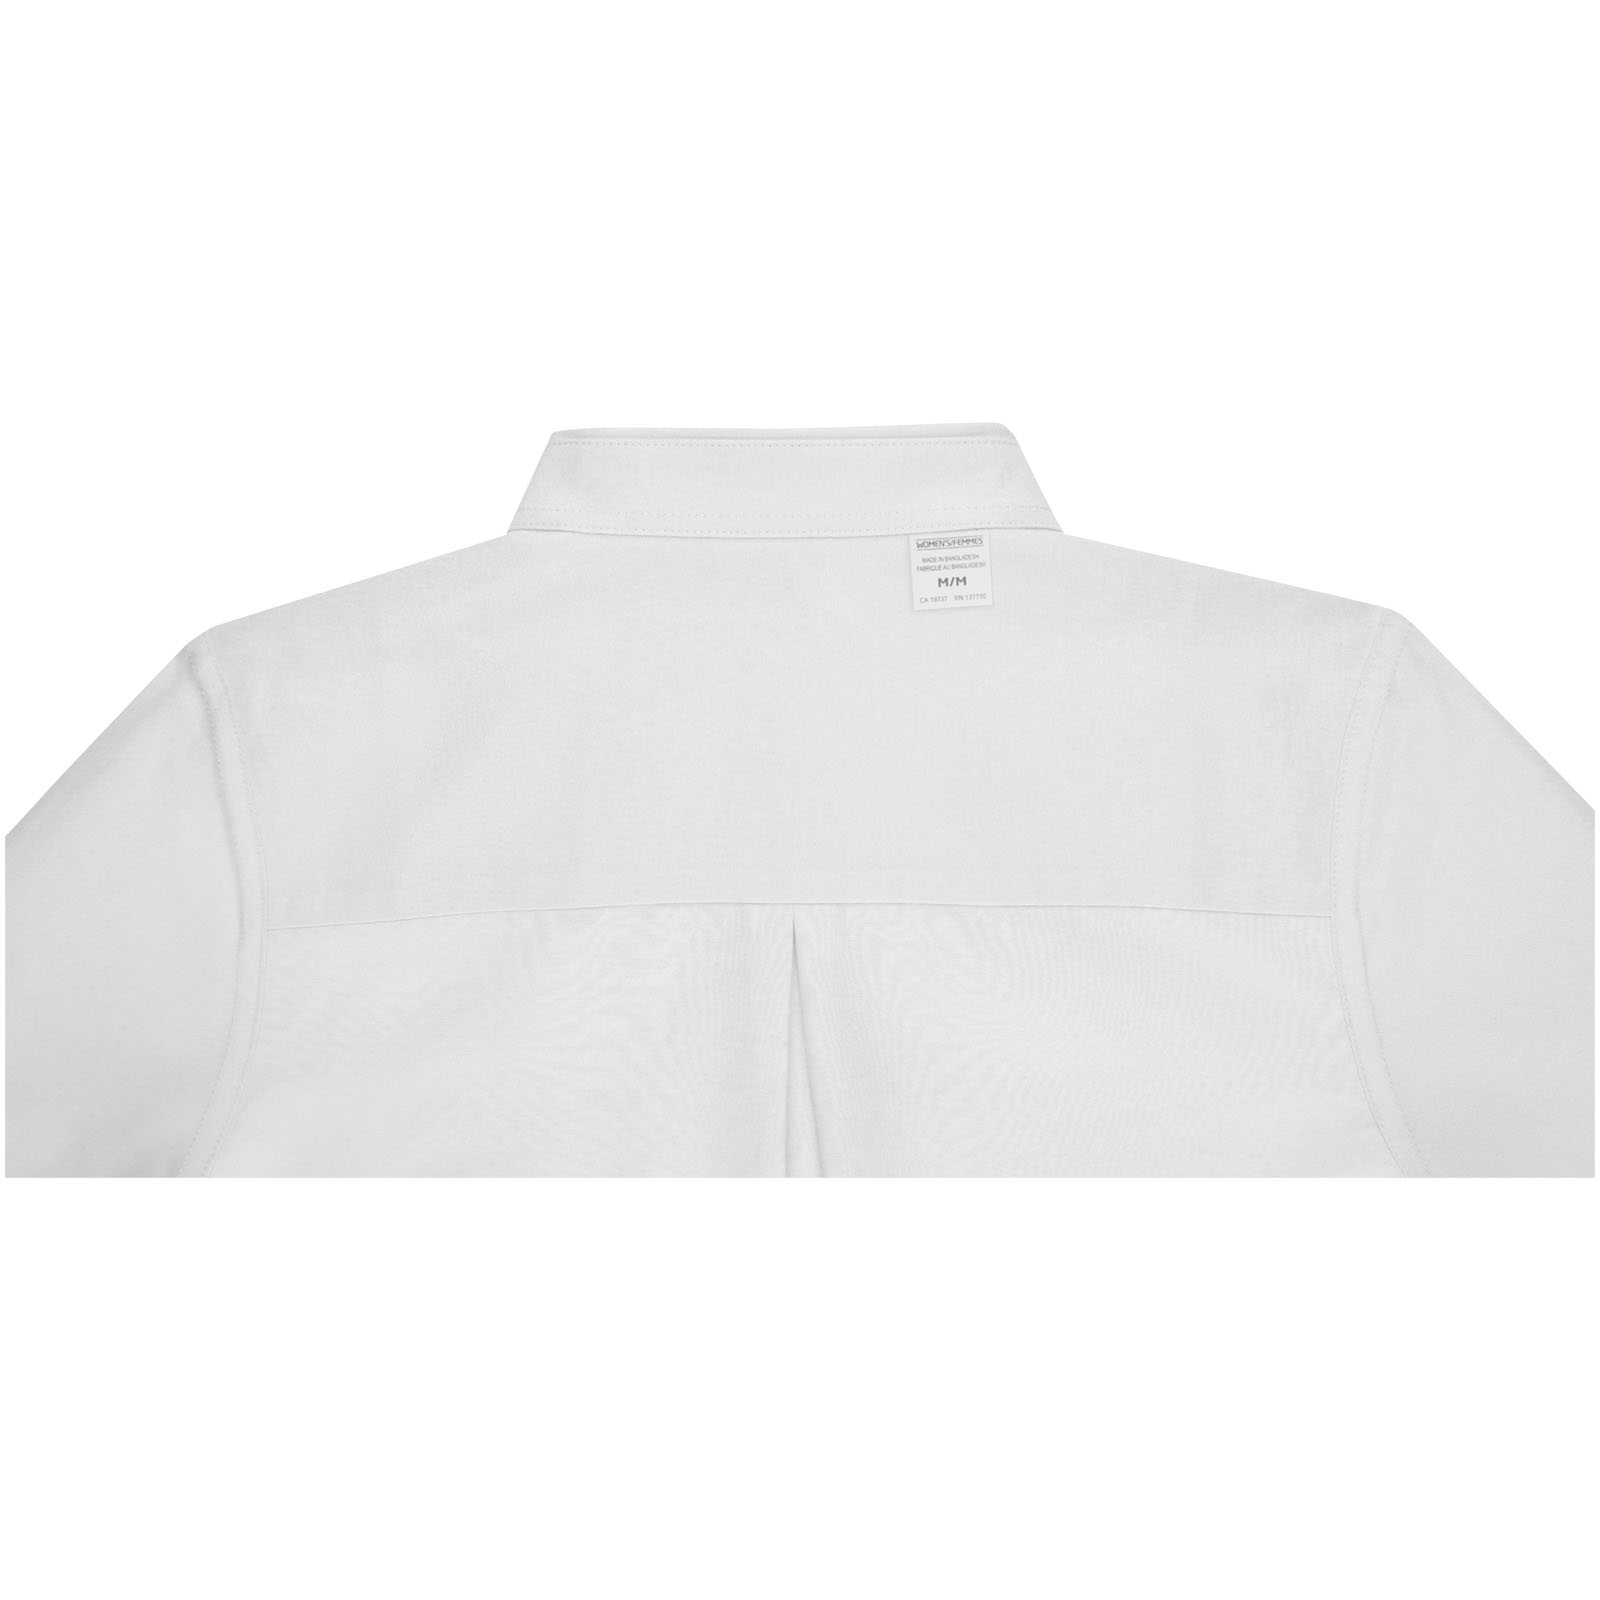 Advertising Shirts - Pollux long sleeve women's shirt - 3